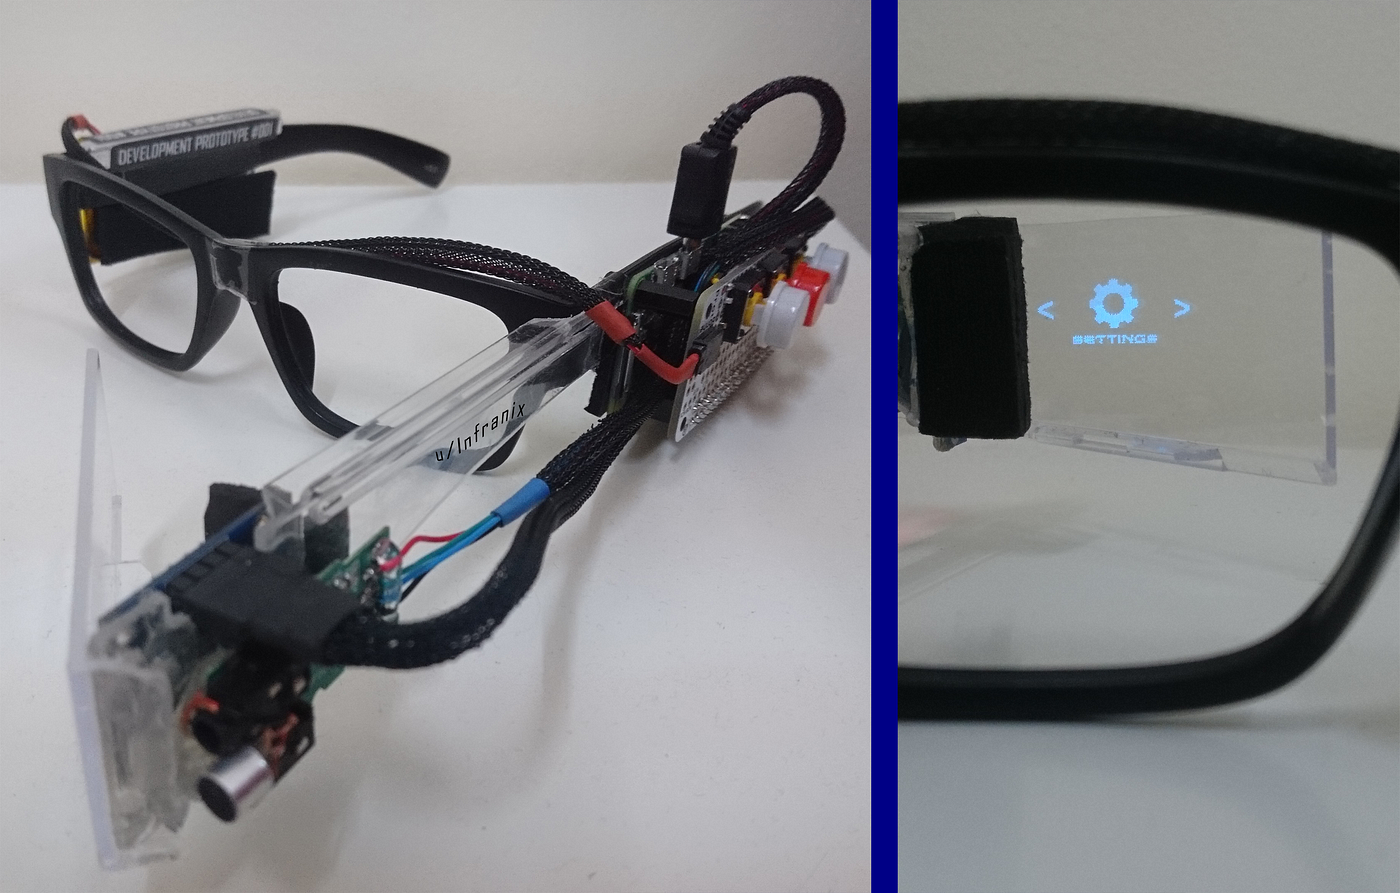 DIY Smart Glasses Built with a Raspberry Pi Zero W | by Cameron Coward |  Medium